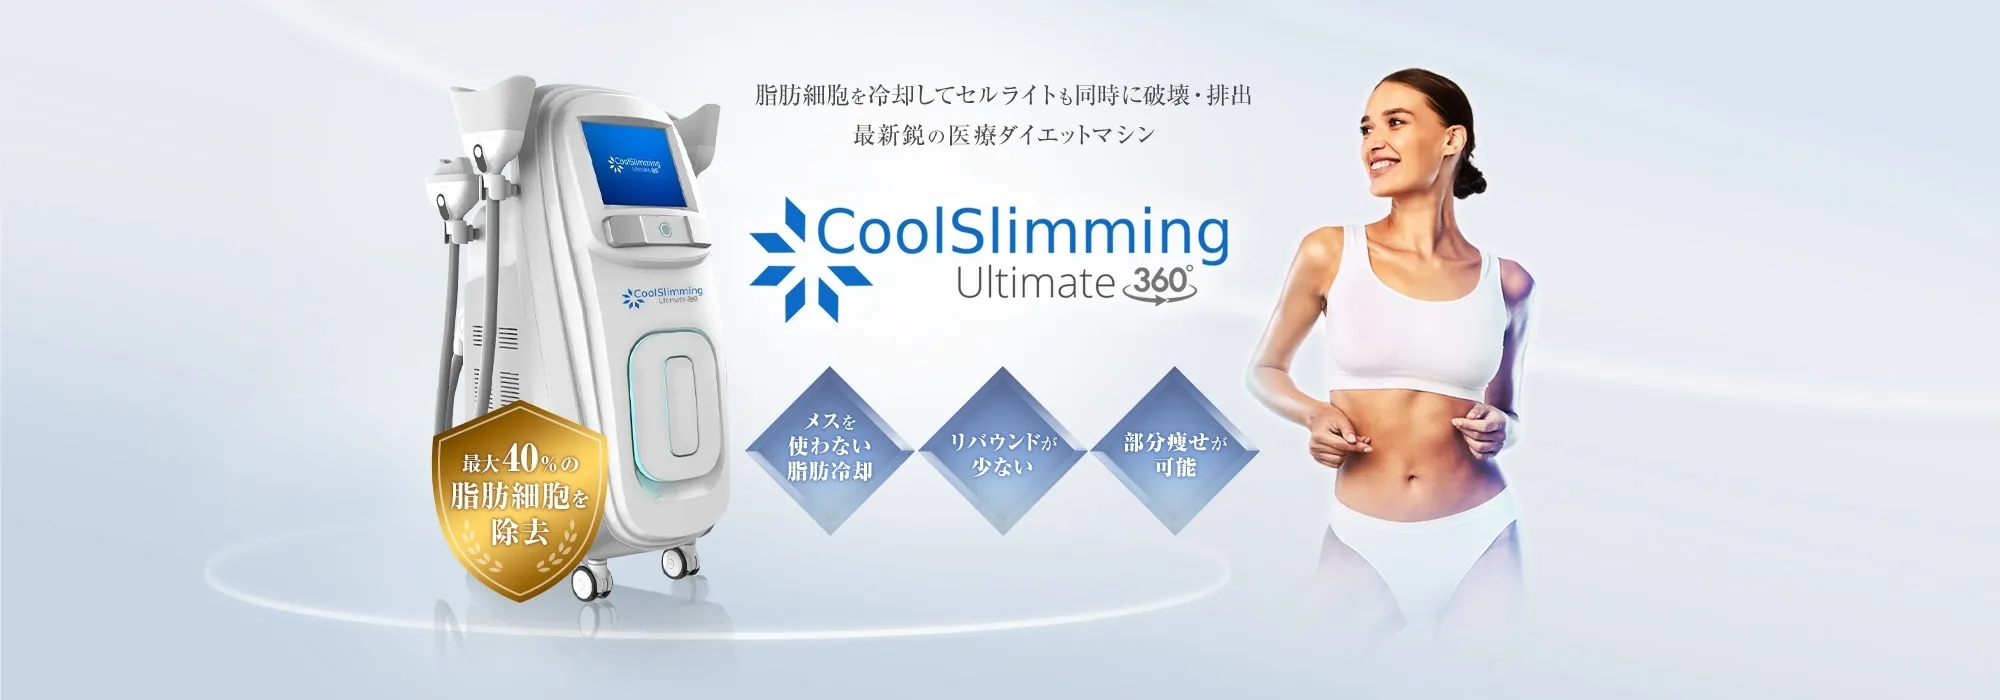 CoolSlimming Ultimate メスを使わない脂肪冷却 リバウンドが少ない 部分痩せが可能